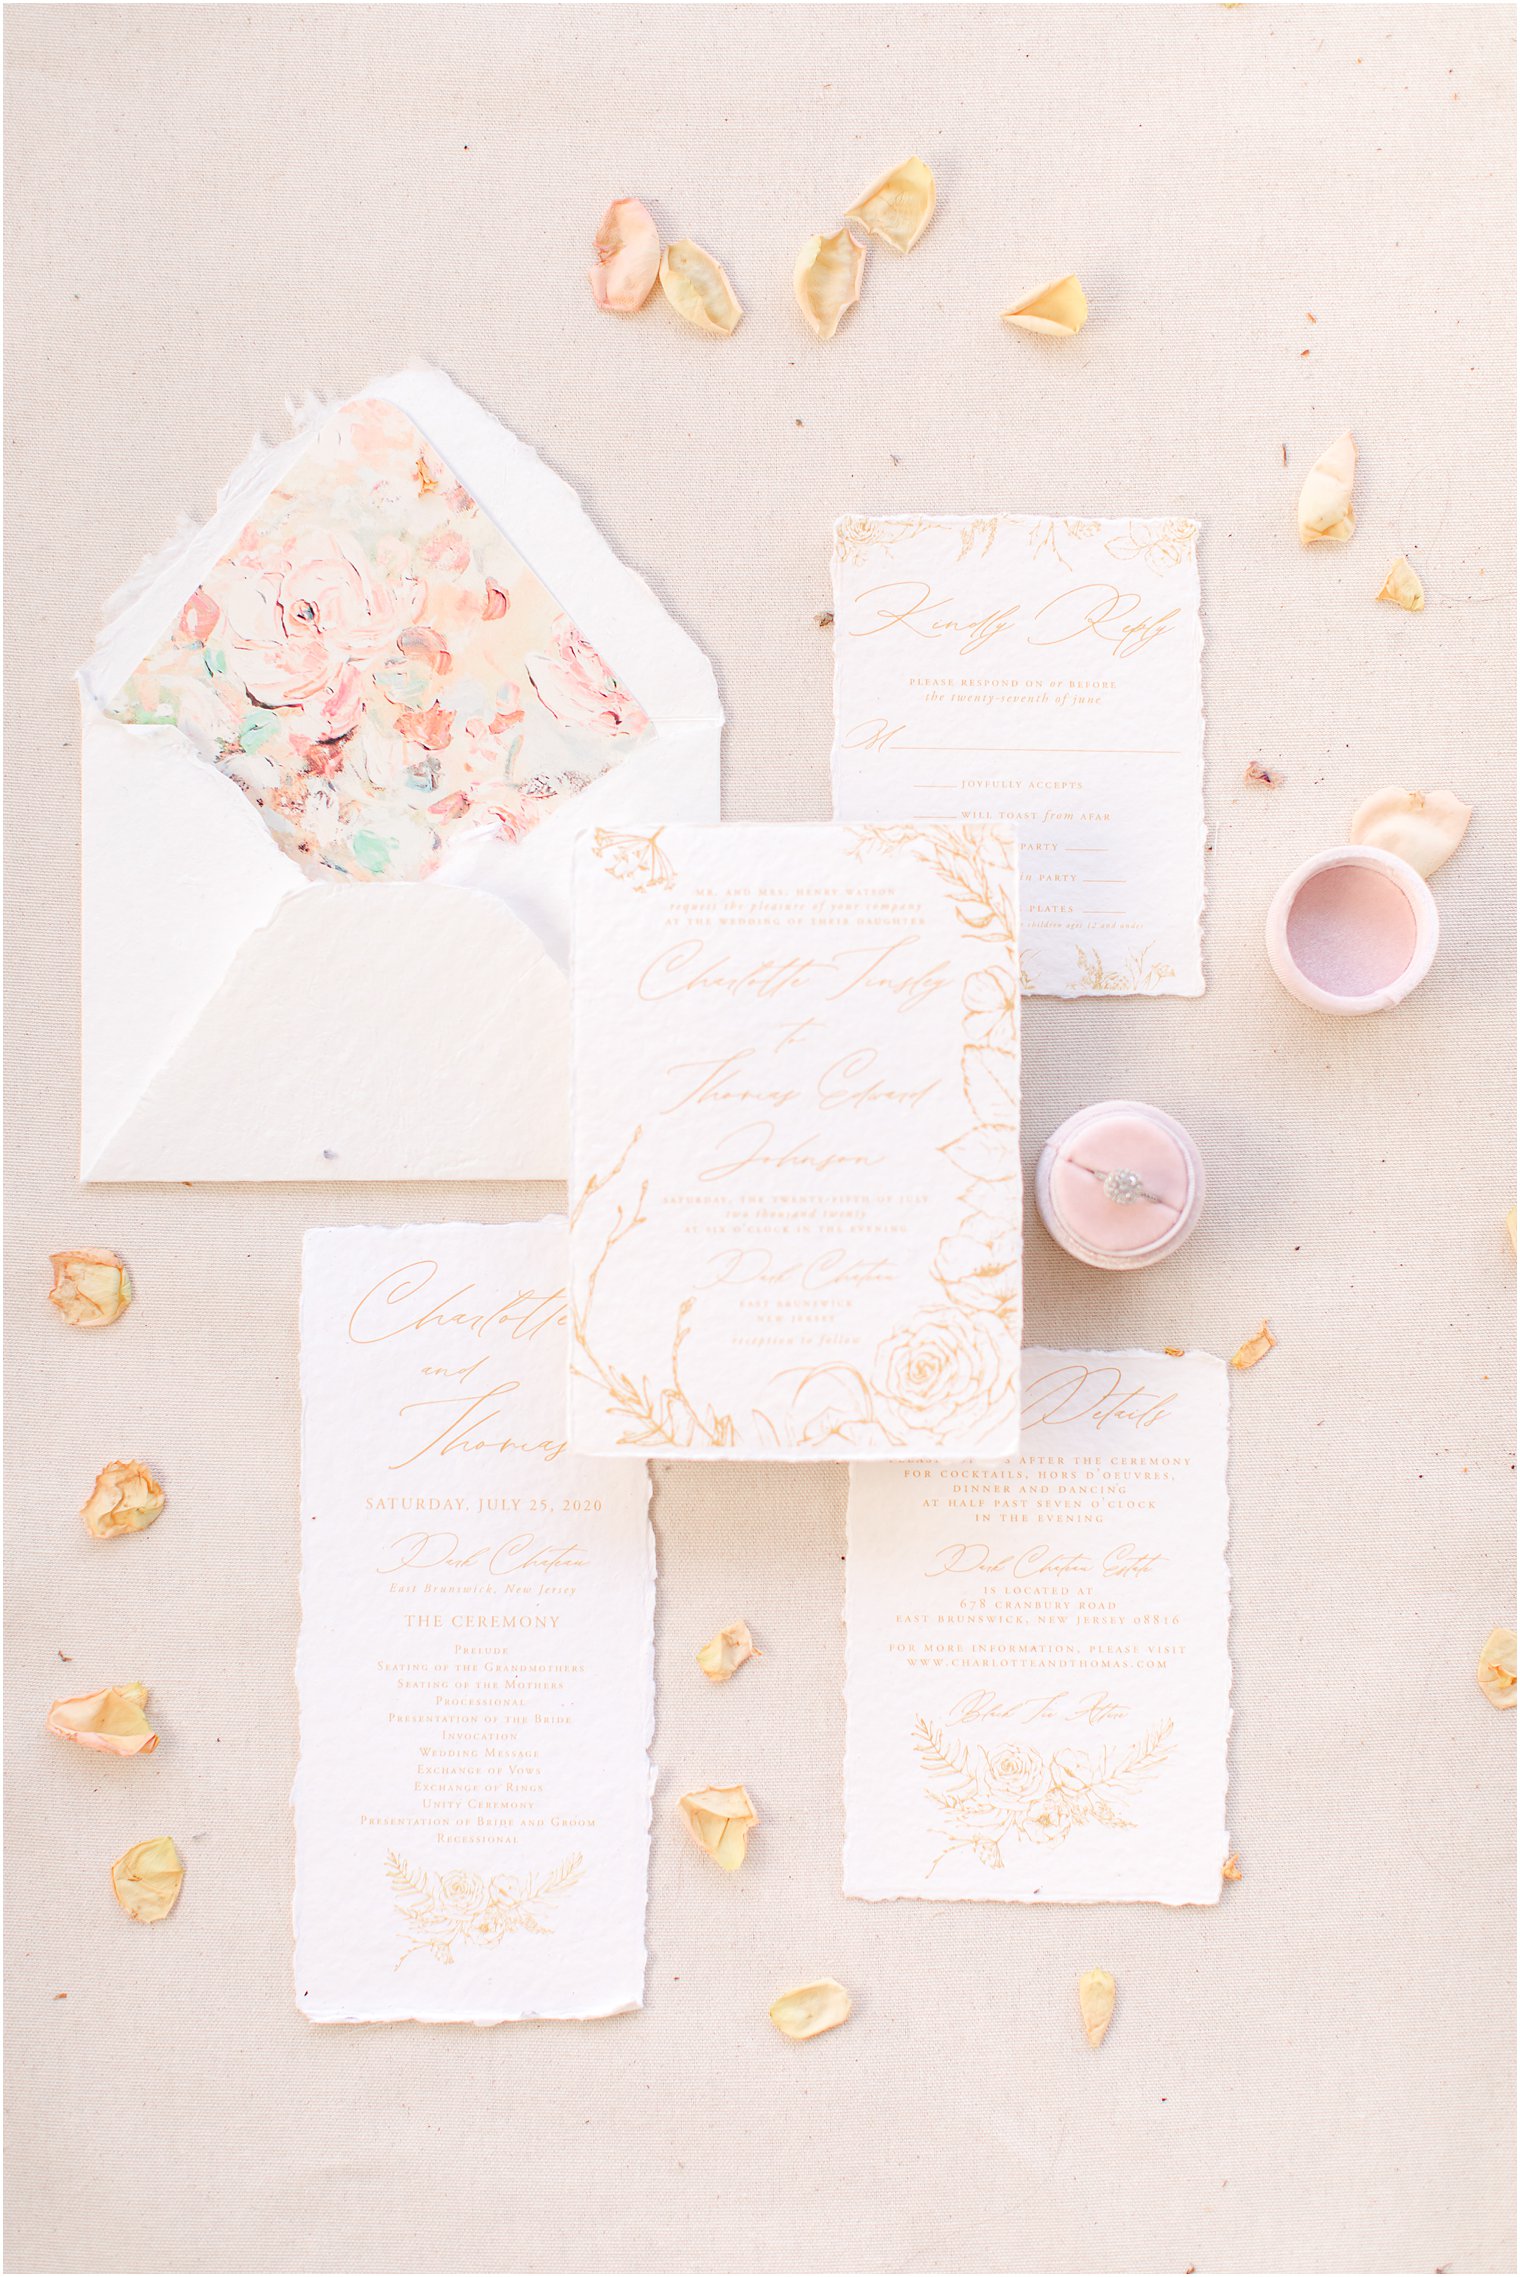 Organic wedding invitation on linen paper